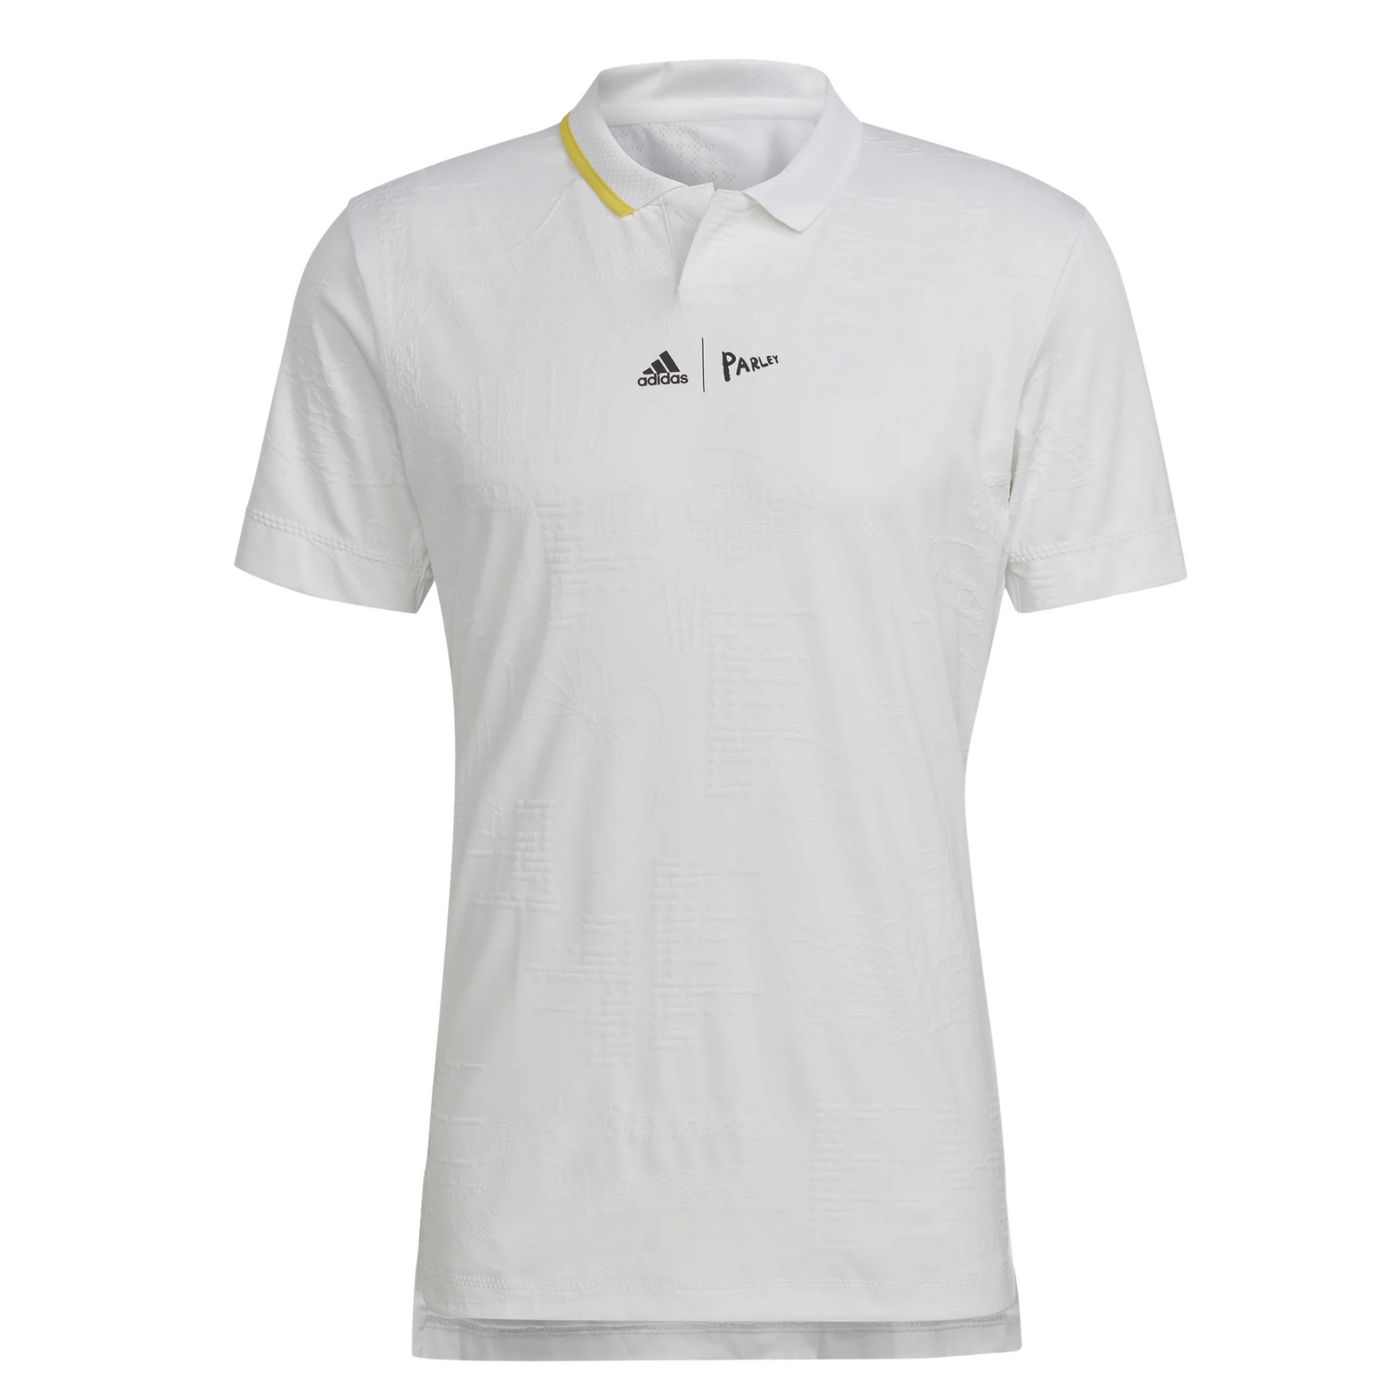 Adidas London Free Lift Polo Shirt - White